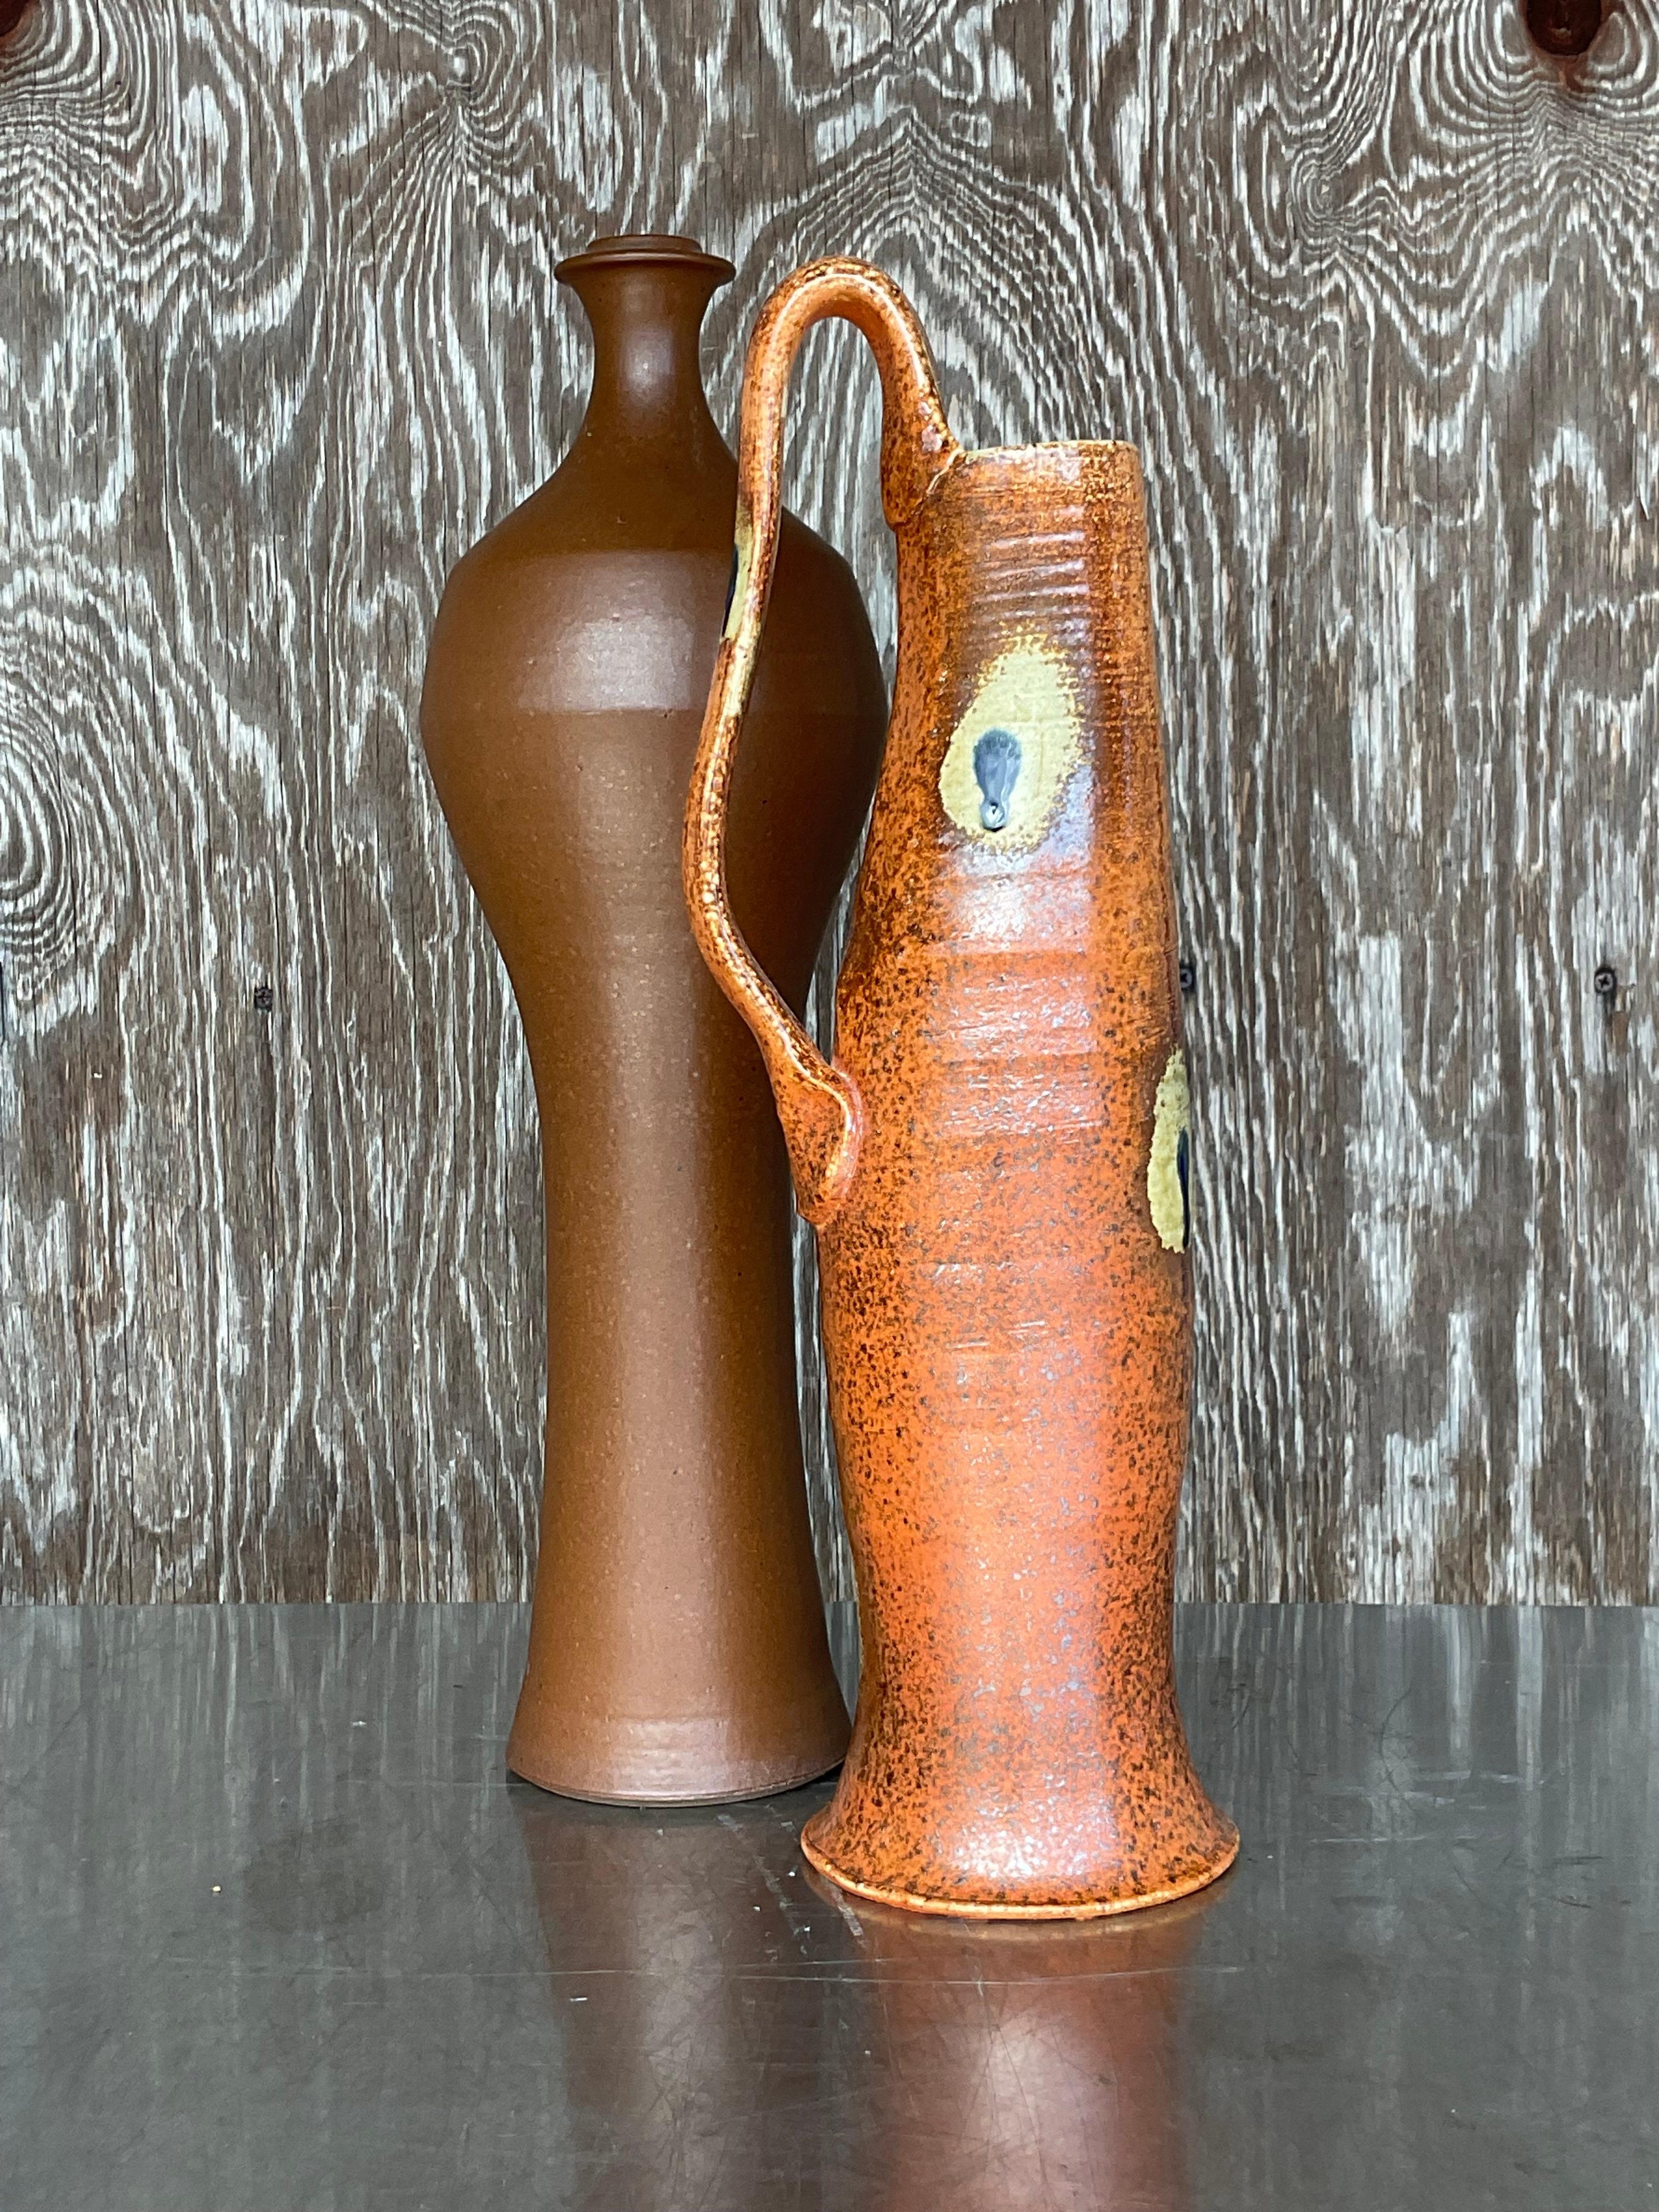 American Vintage Boho Studio Pottery Vases - Set of 2 For Sale